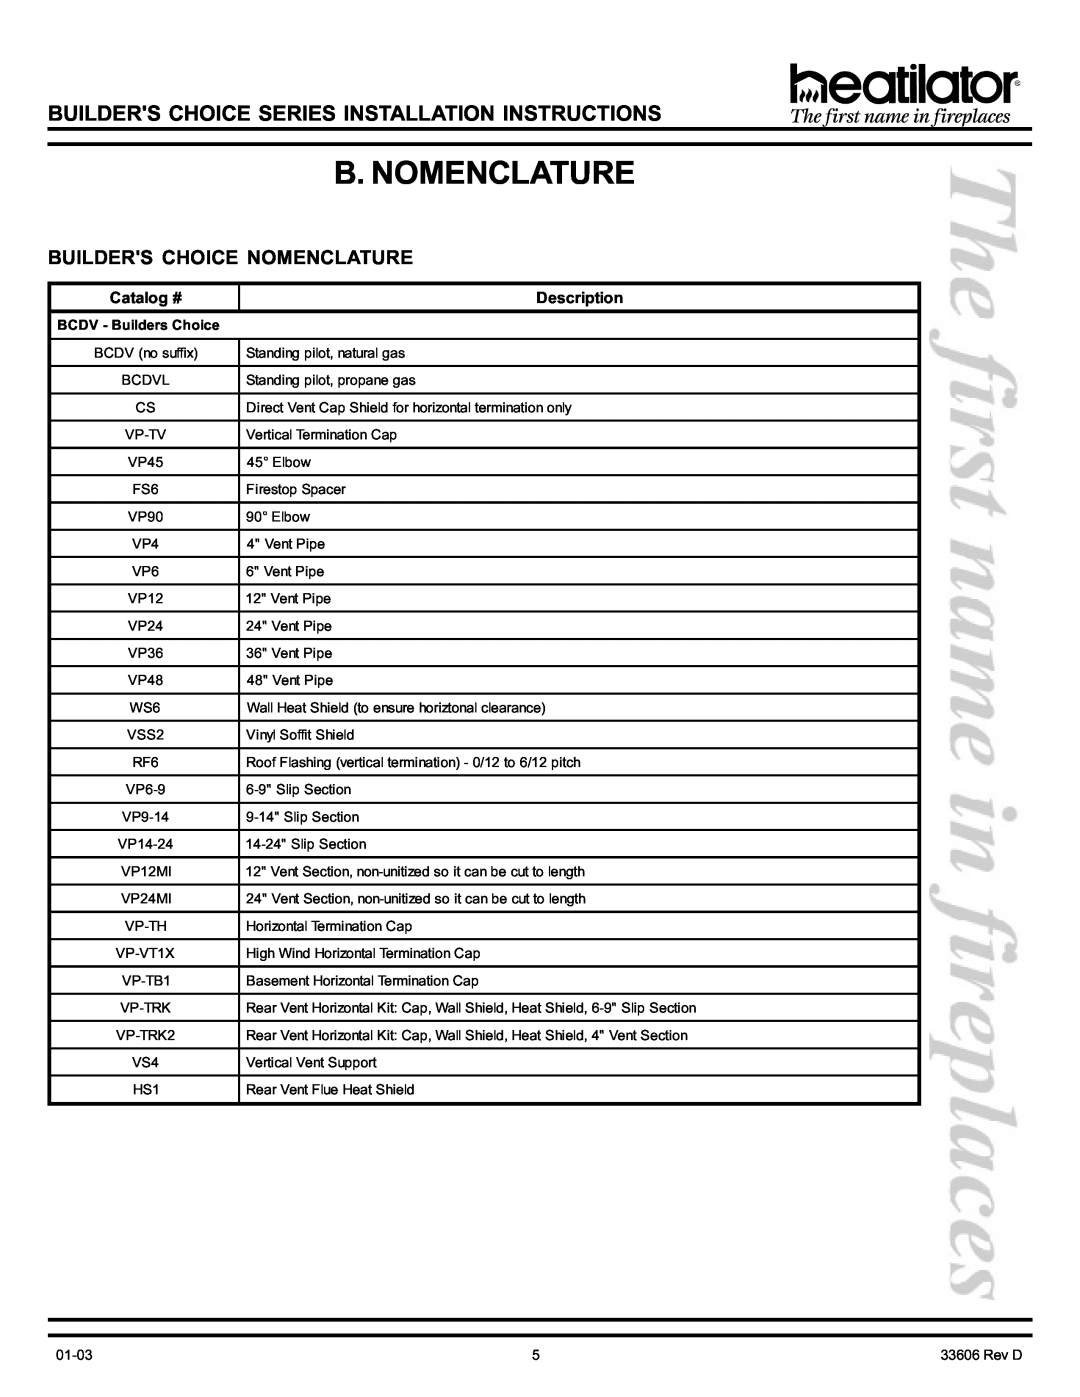 Heatiator BCDV36 manual B. Nomenclature, Builders Choice Nomenclature, Catalog #, Description, BCDV - Builders Choice 